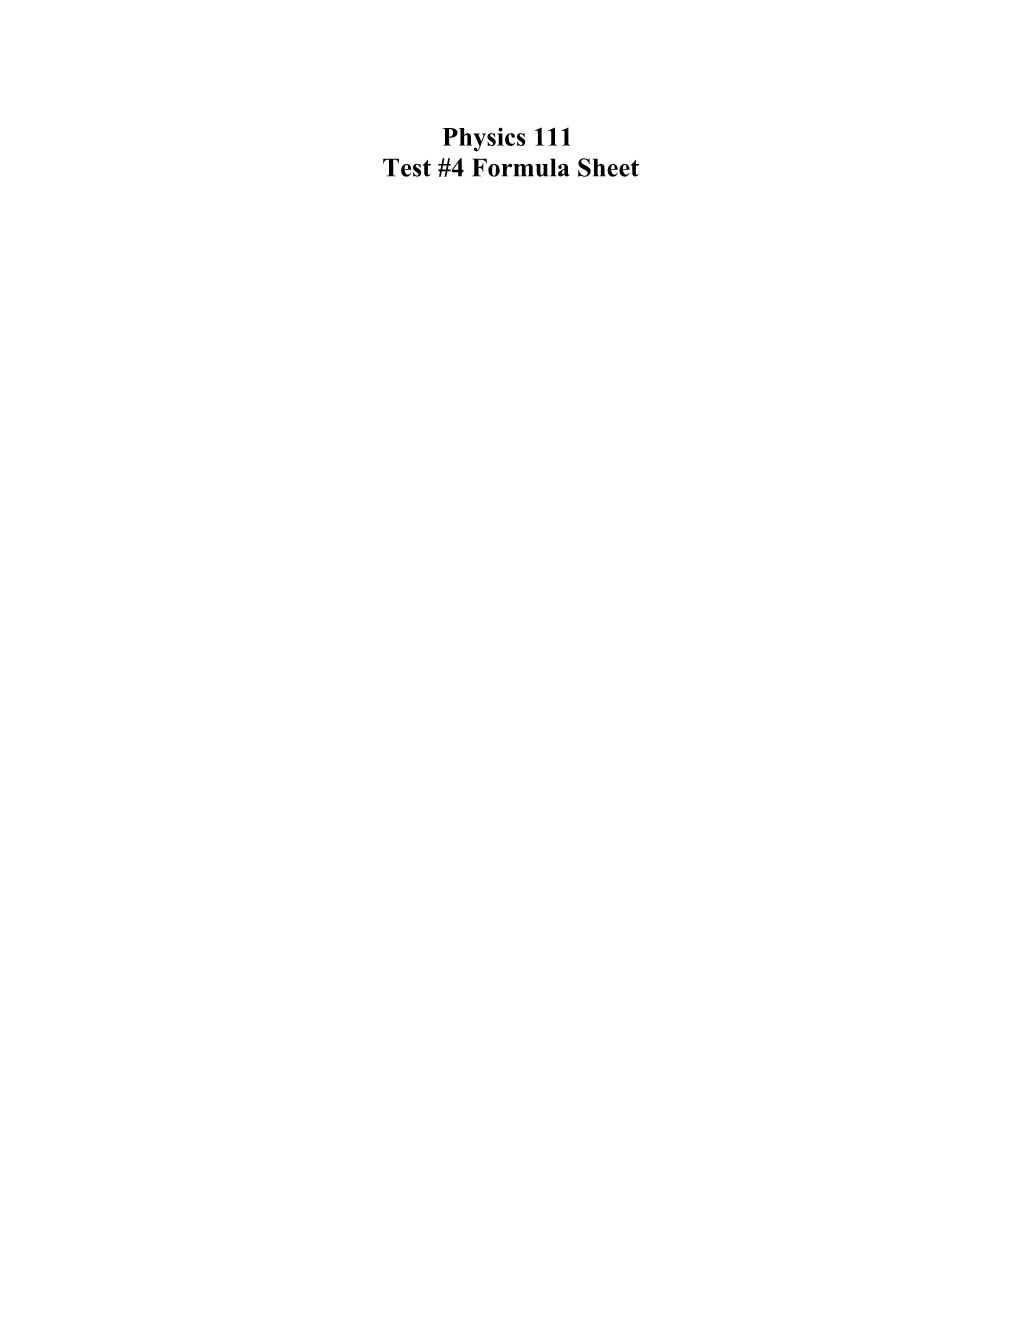 Test #4 Formula Sheet